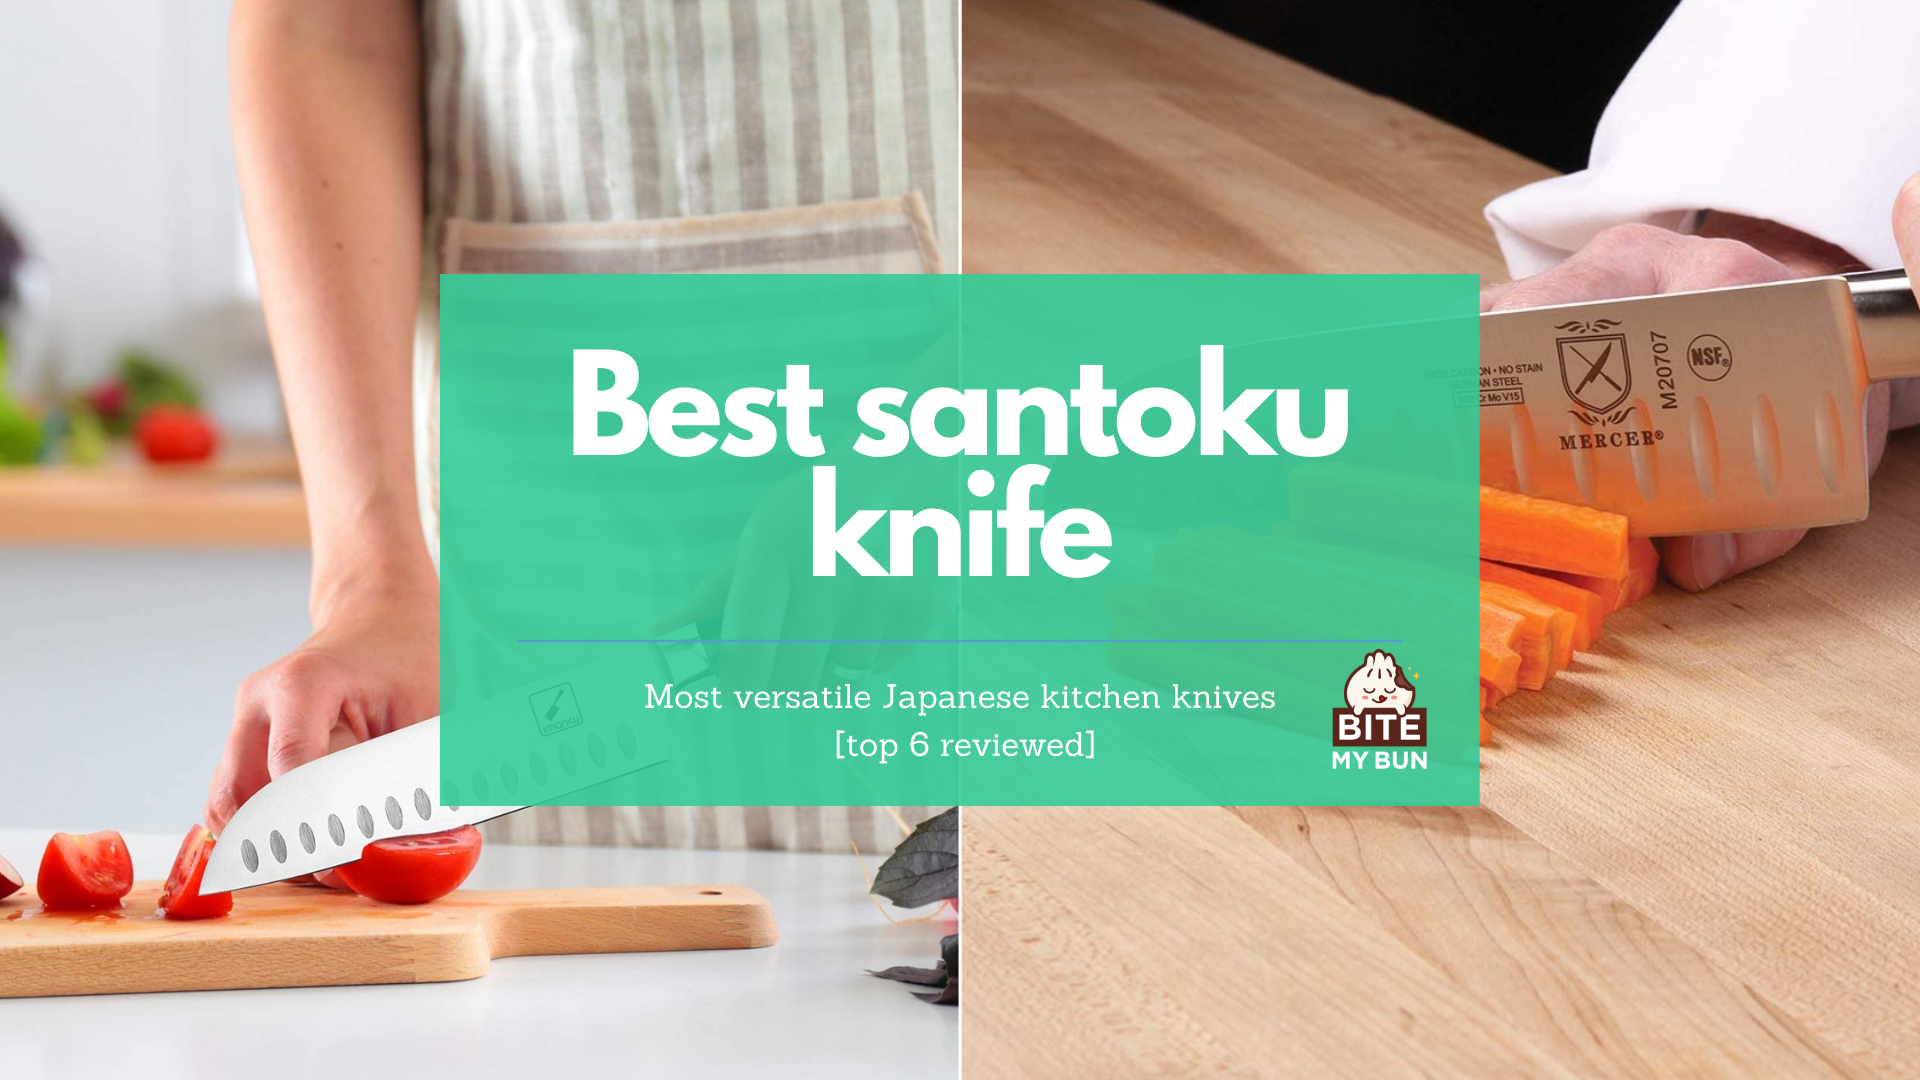 Bedste santokukniv | Mest alsidige japanske køkkenknive [top 6 anmeldt]